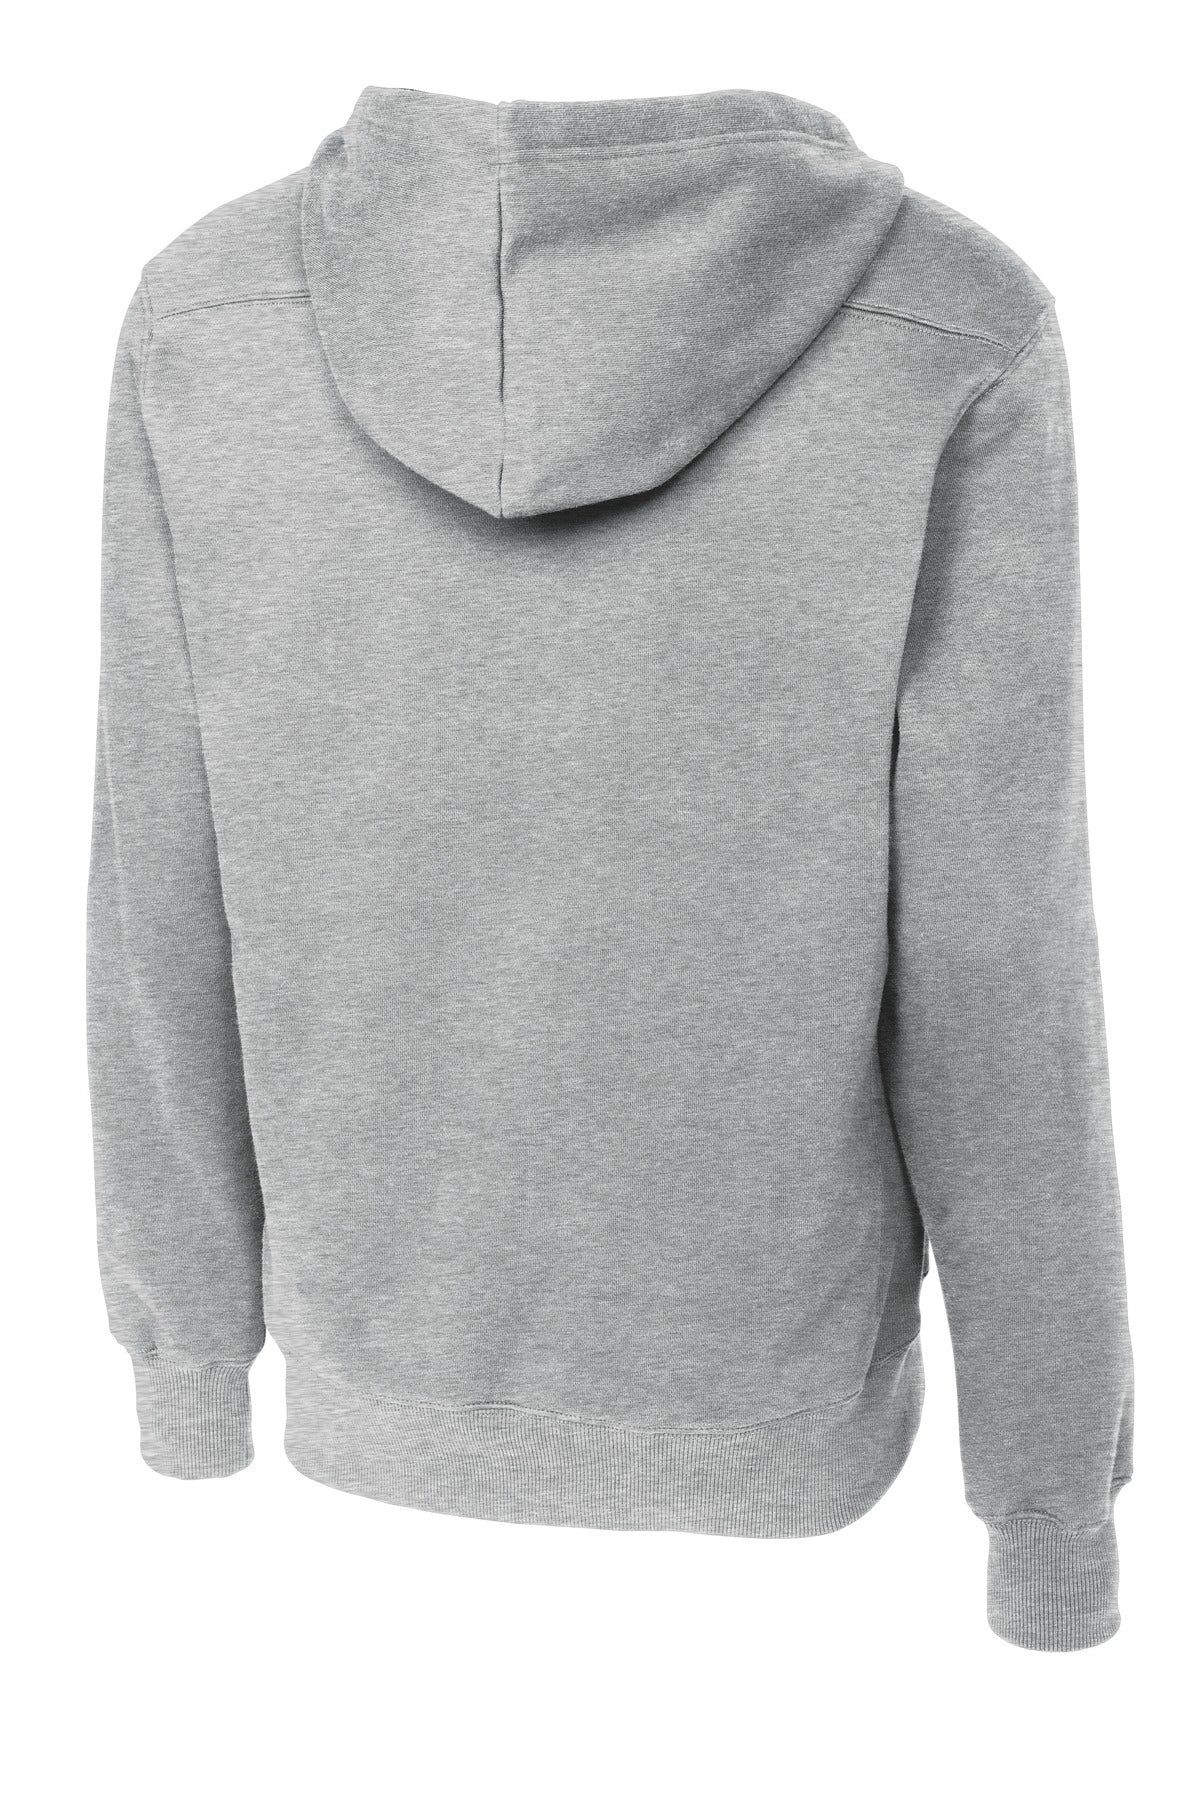 Sport-Tek Lace Up Pullover Hooded Sweatshirt. ST271